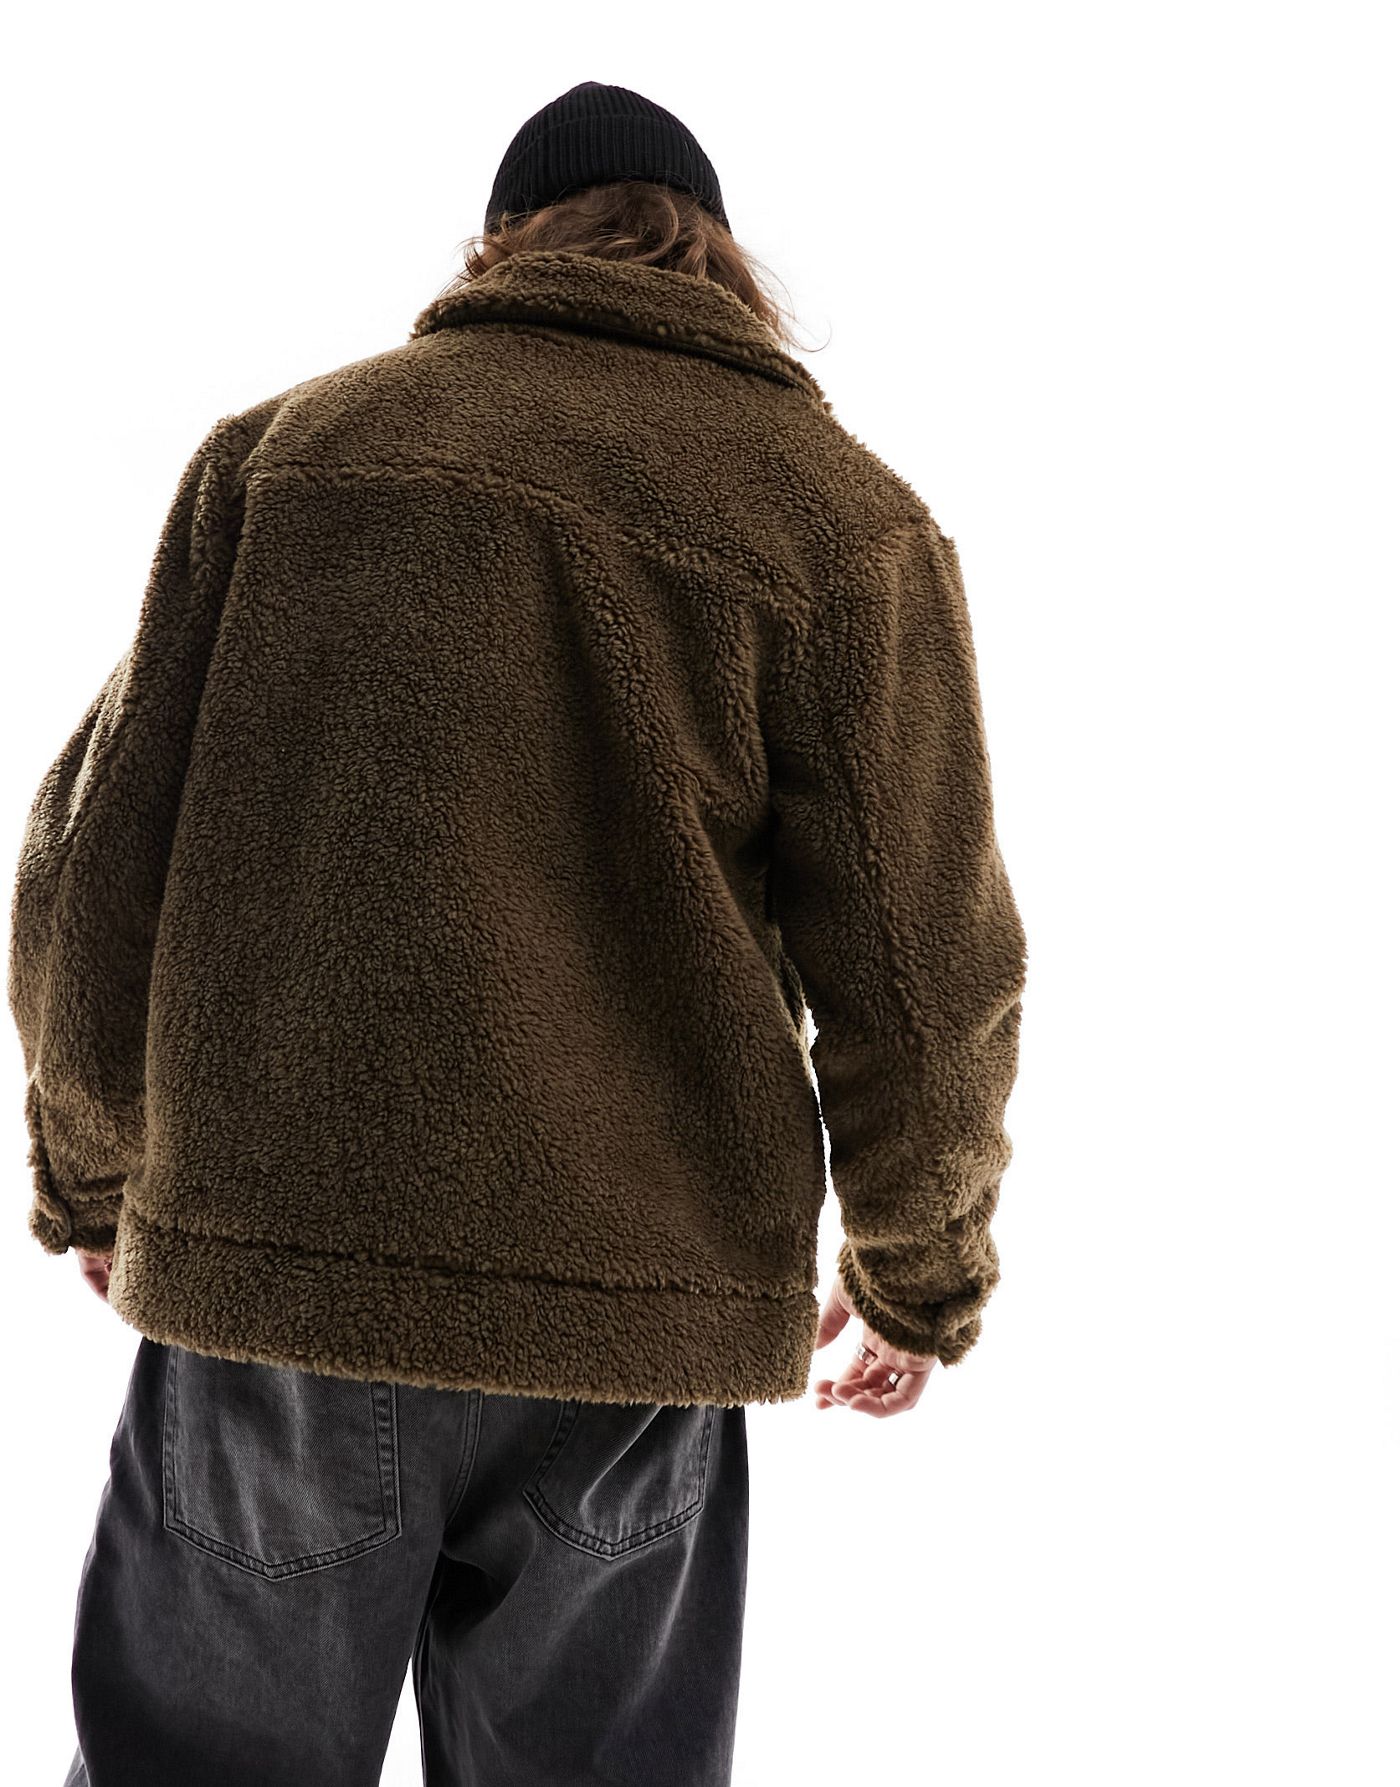 Lee borg sherpa harrington jacket in brown